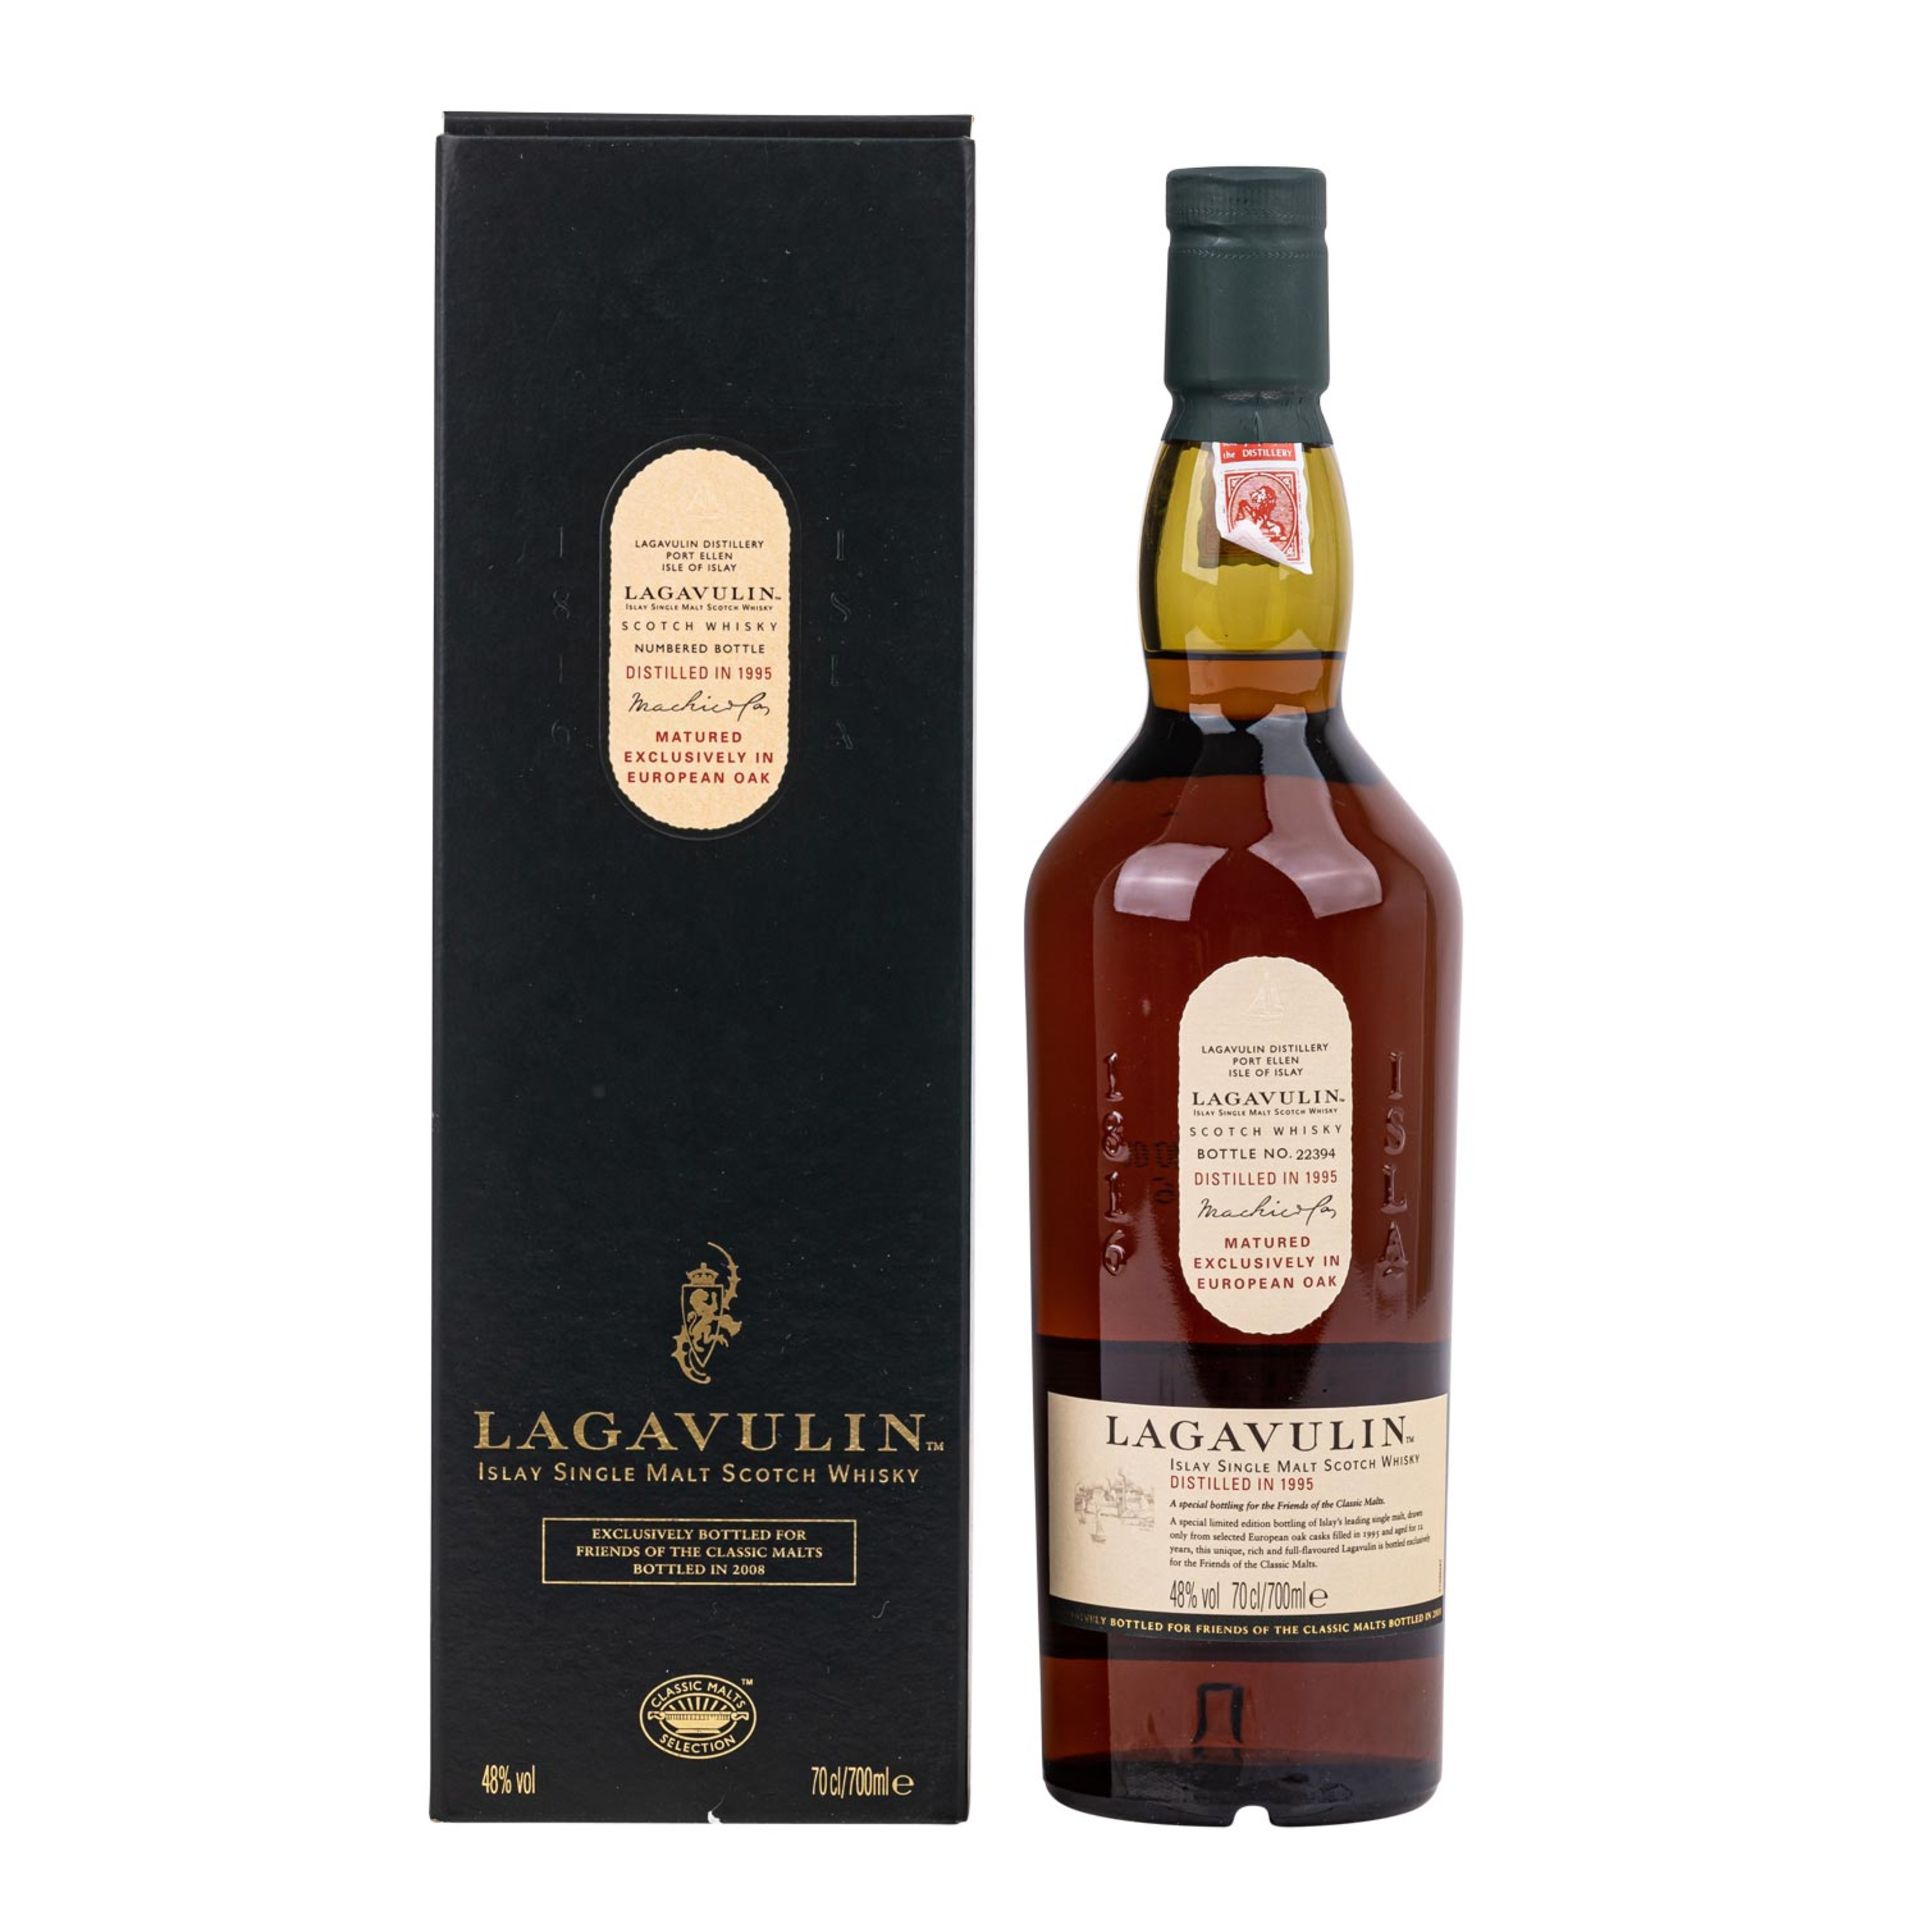 LAGAVULIN Single Malt Scotch Whisky 1995